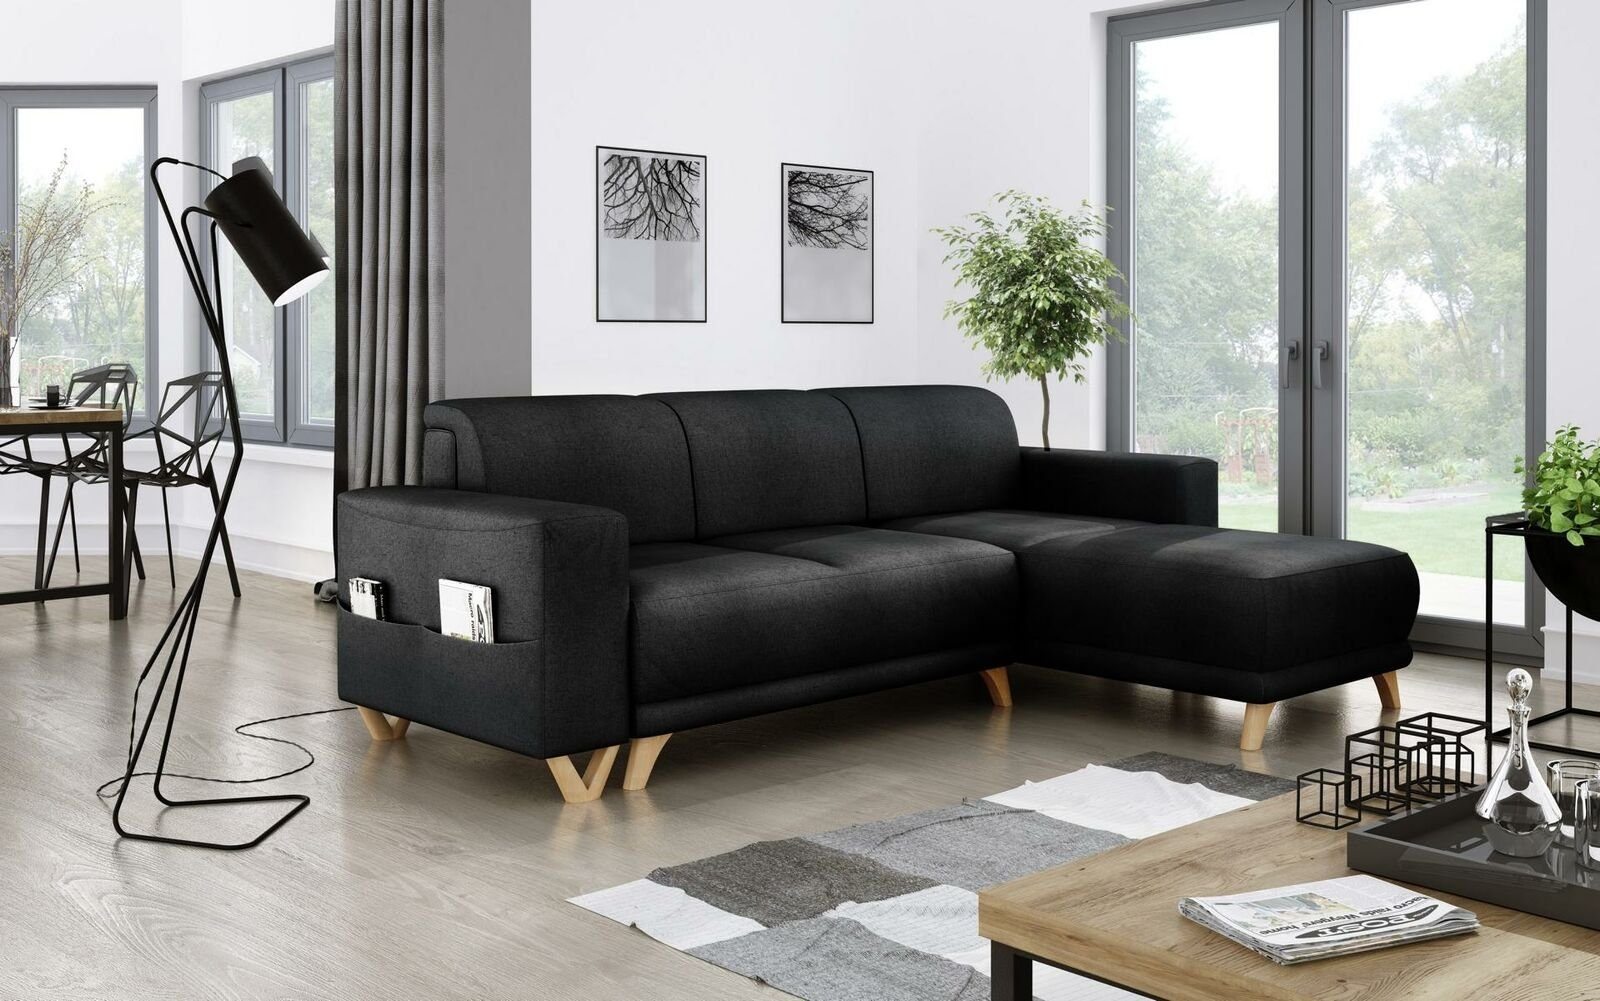 JVmoebel Sofa Design Bettfunktion Schlafsofa Textil Bettfunkt, Polster Ecksofa L-Form Sofa Schwarz Couch Mit